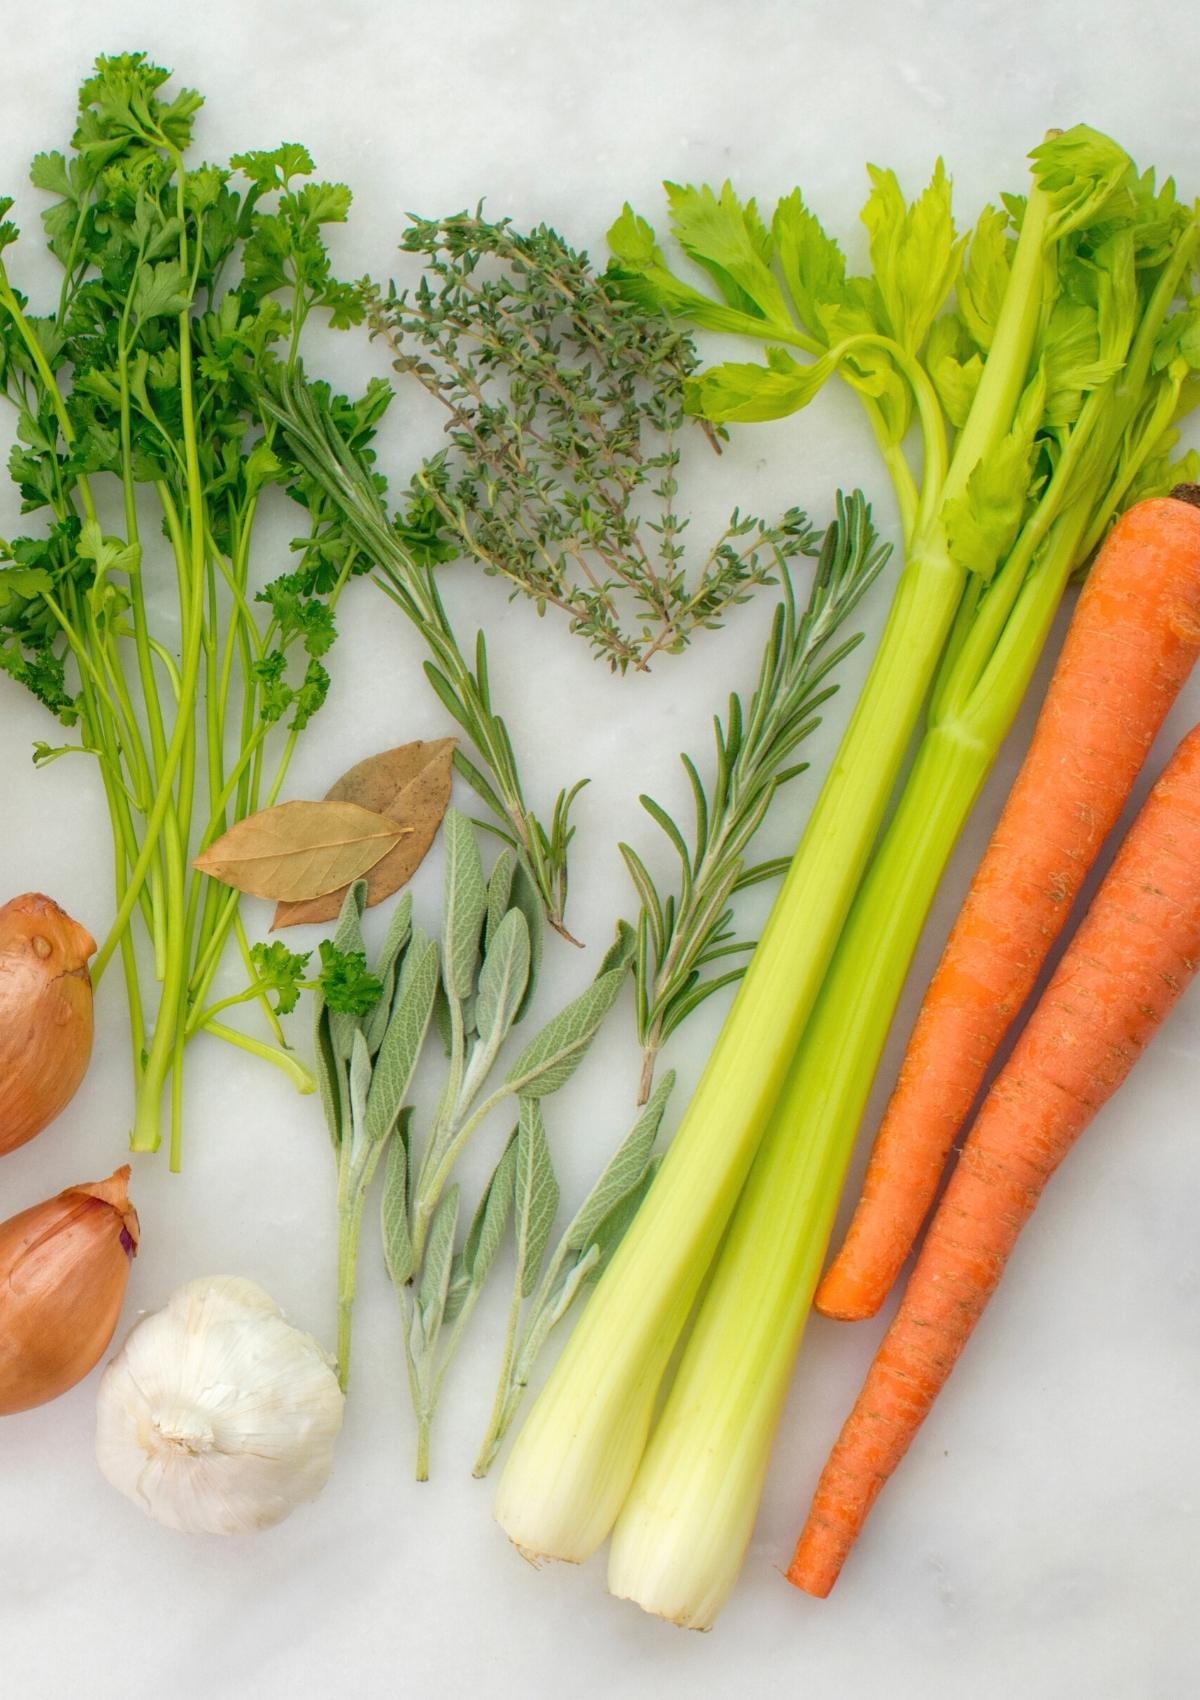 Carrot, Celery, Onion, Herbs